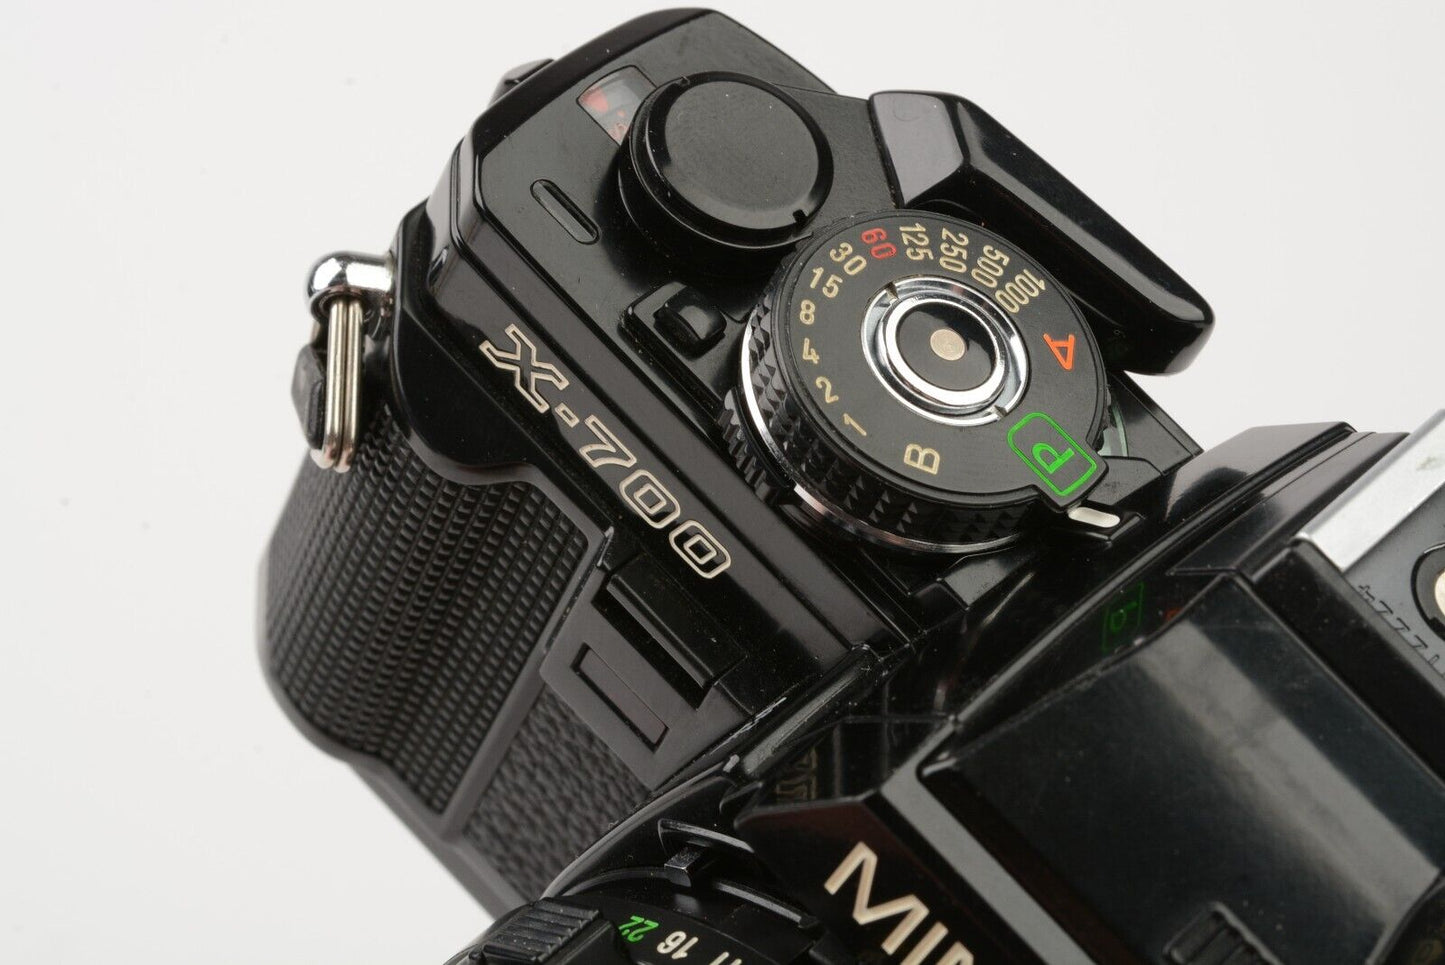 Minolta X700 35mm SLR w/50mm f1.7 + 80-205mm lenses, new seals, nice!